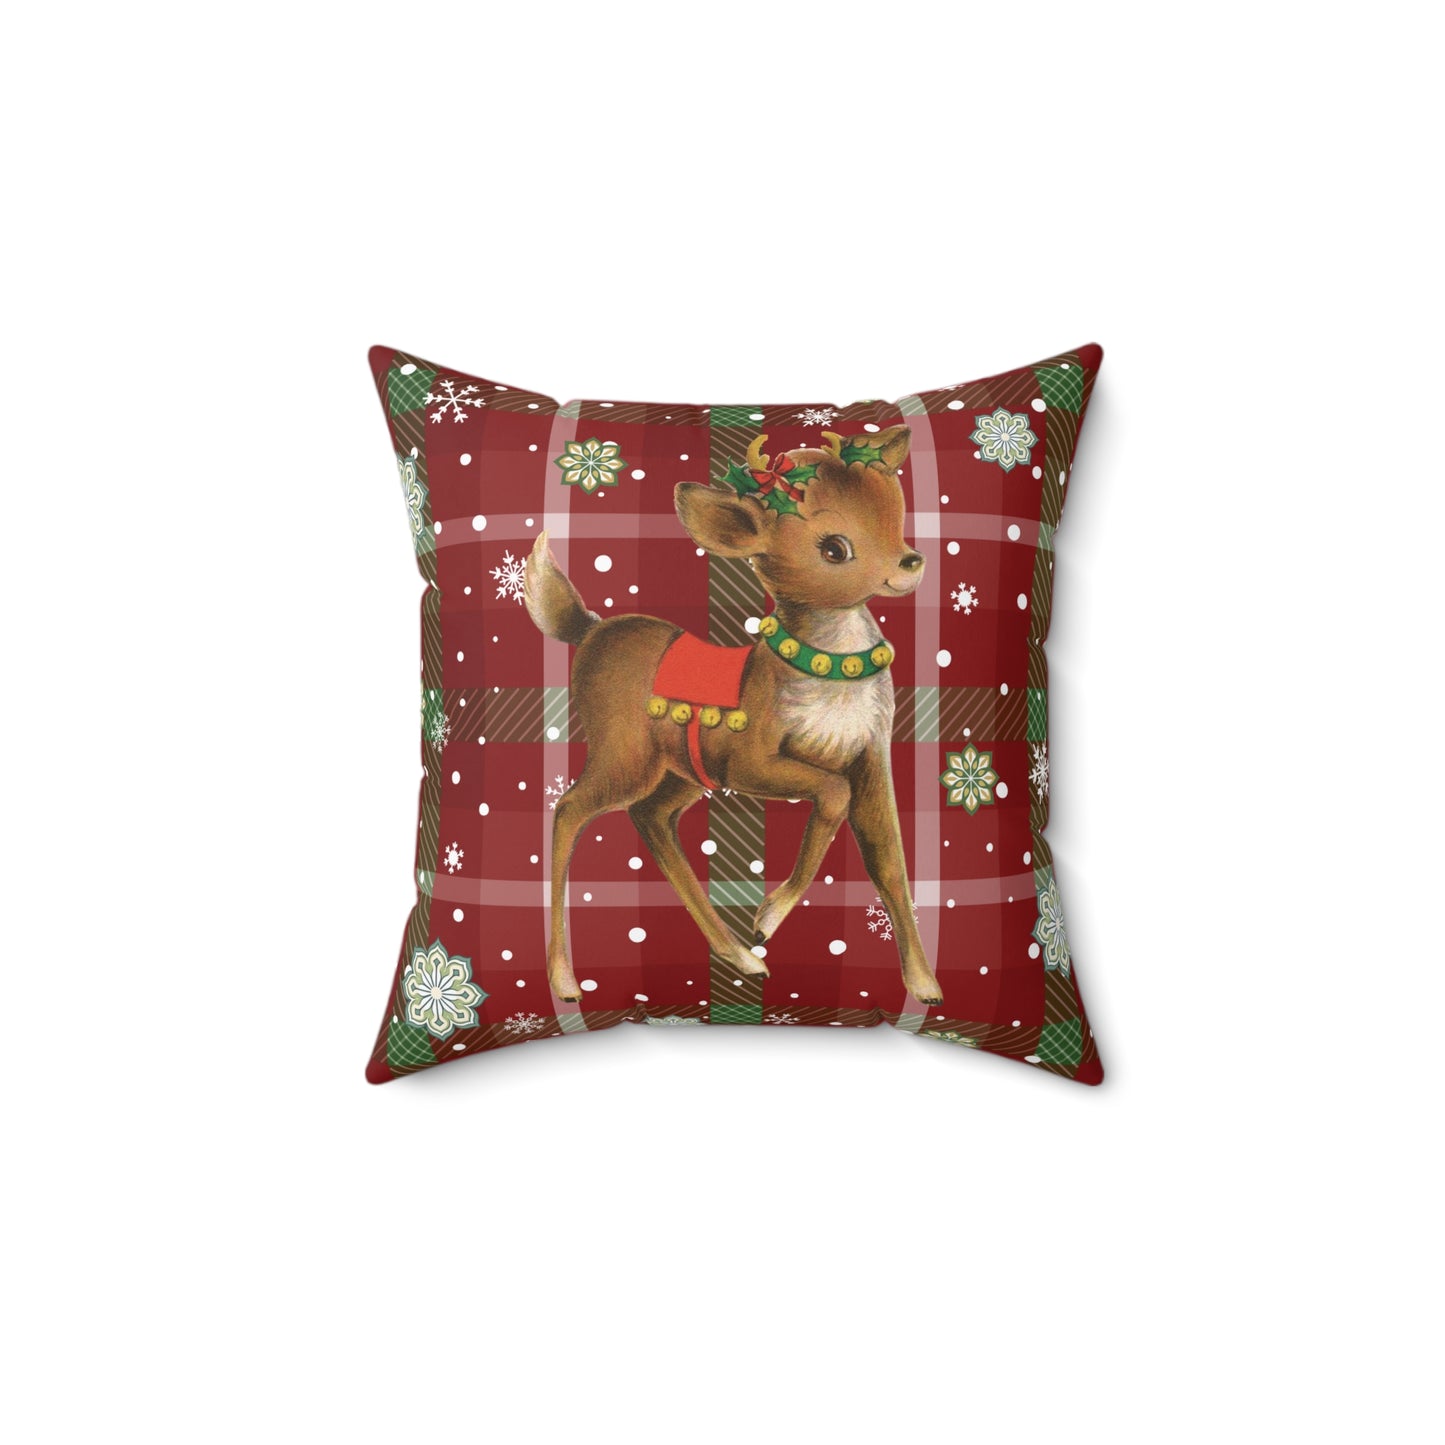 Retro 50's Christmas Vintage Reindeer MCM Red Throw Pillow